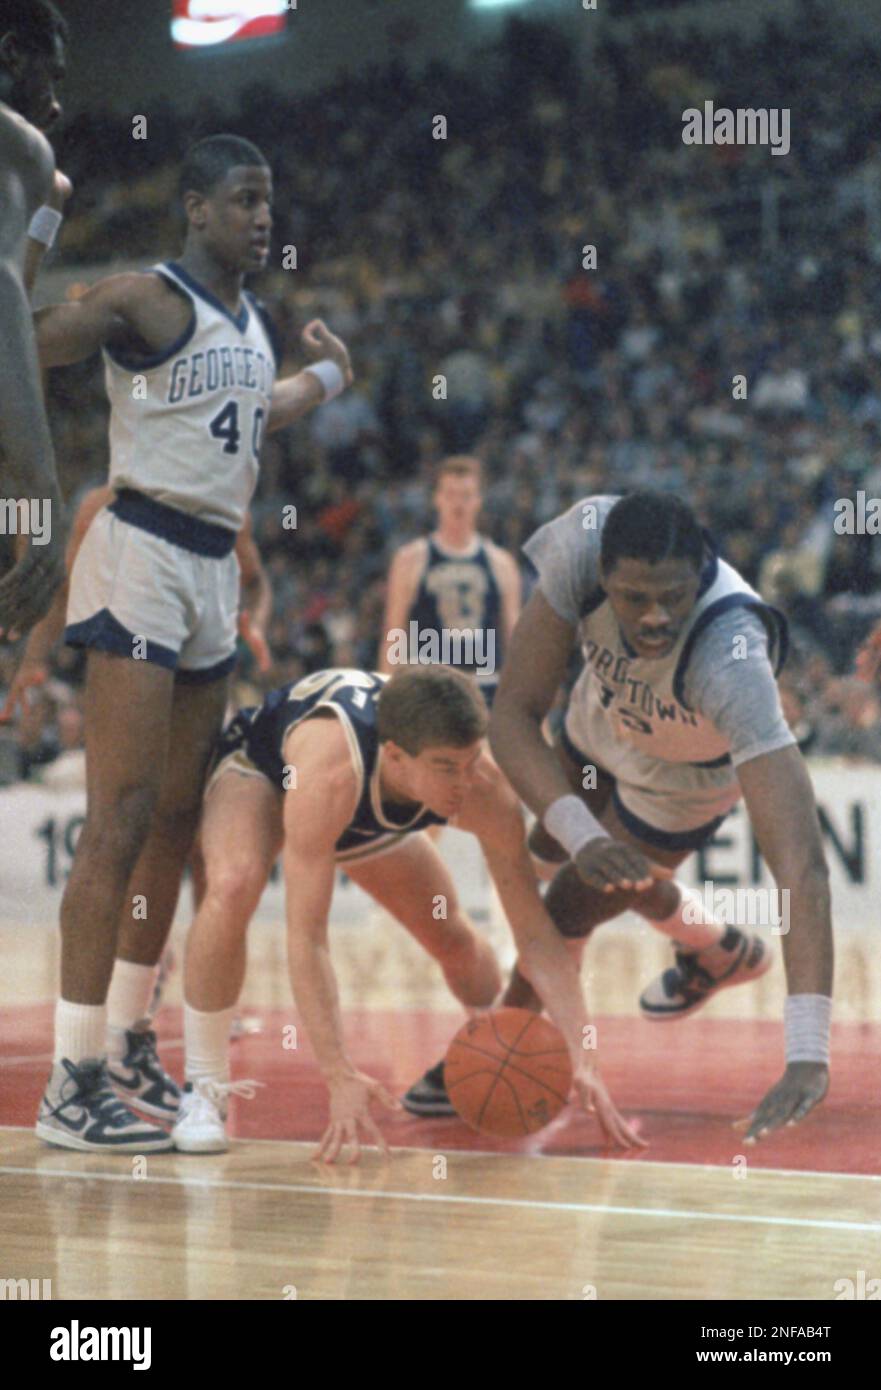 George Muresan - Men's Basketball - Georgetown University Athletics